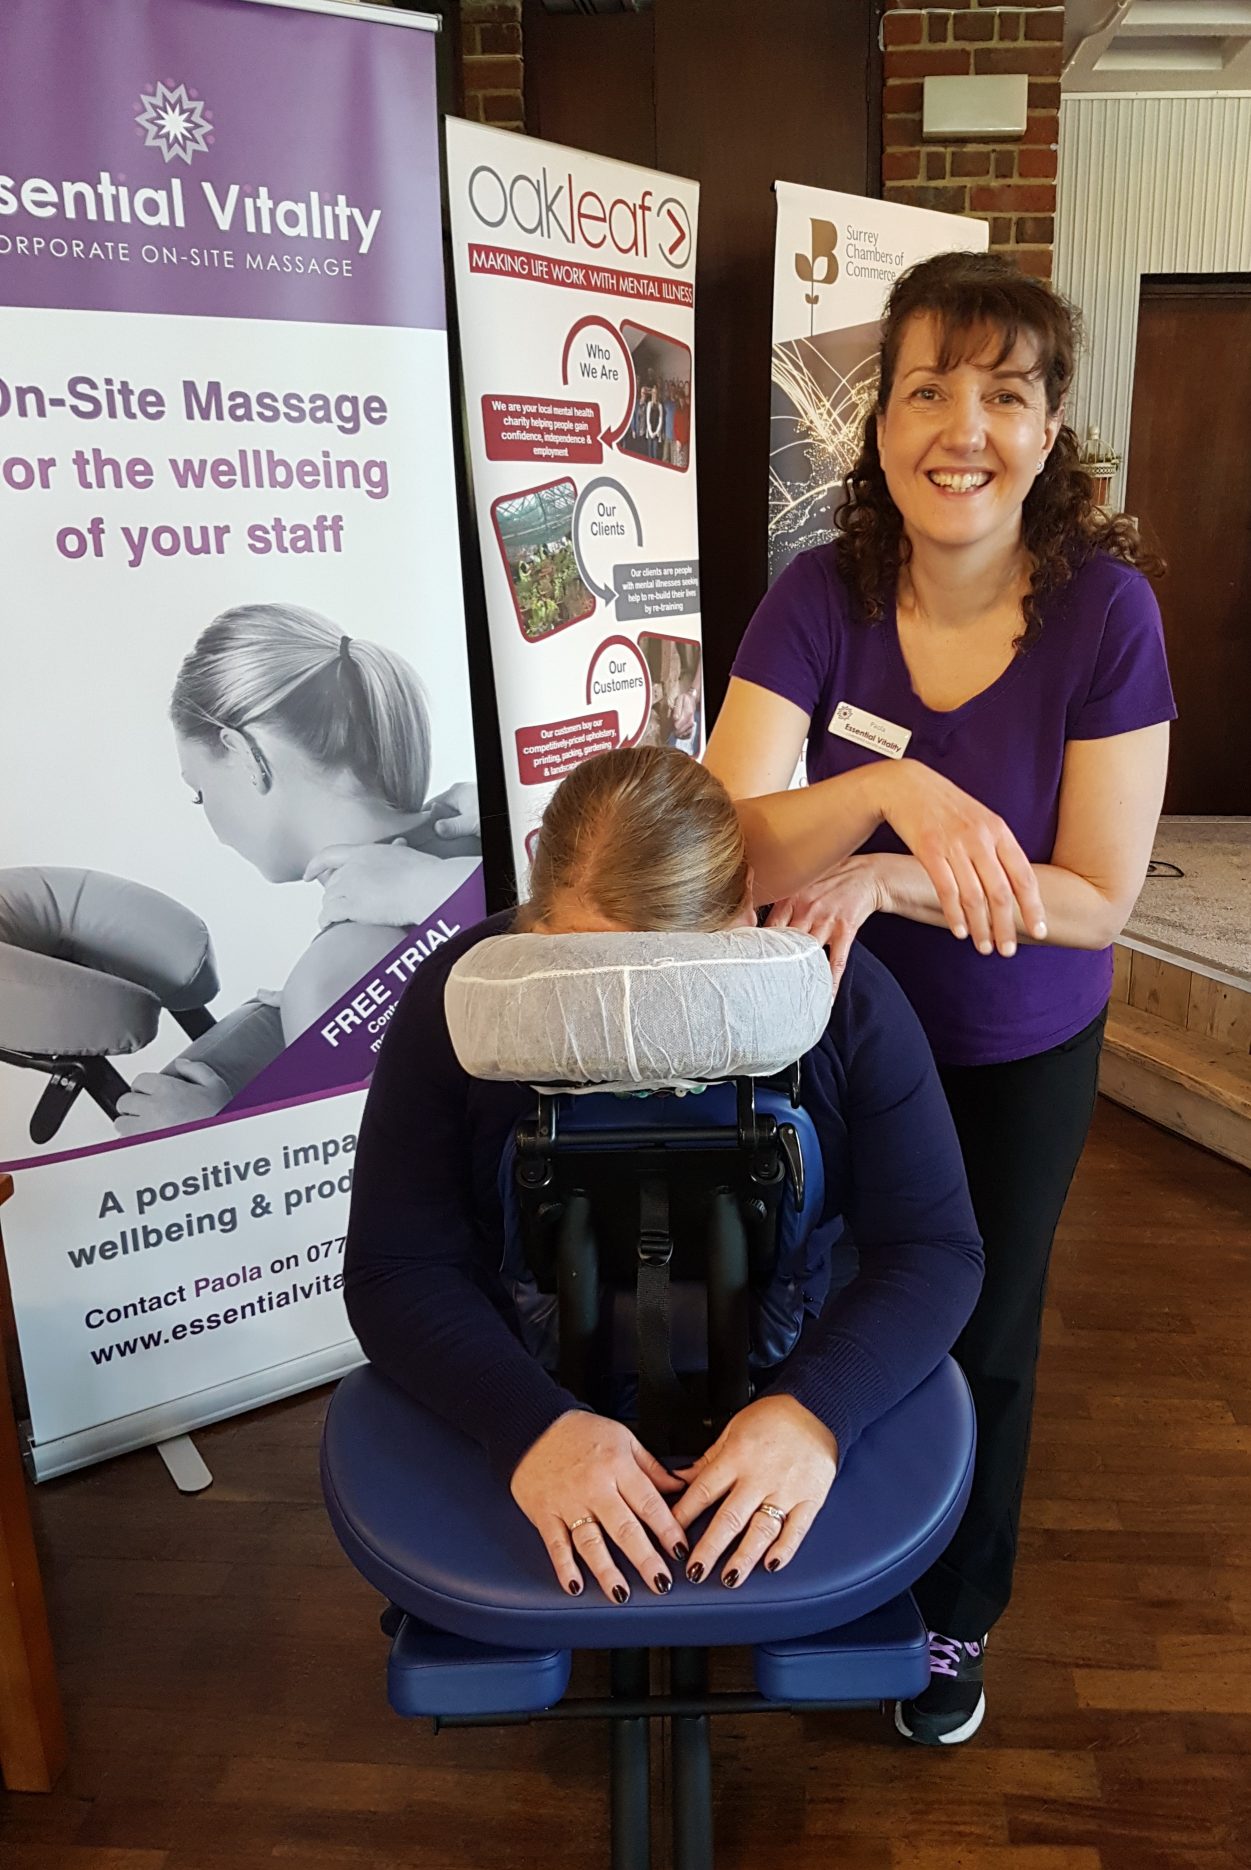 Demonstration of On-Site Massage